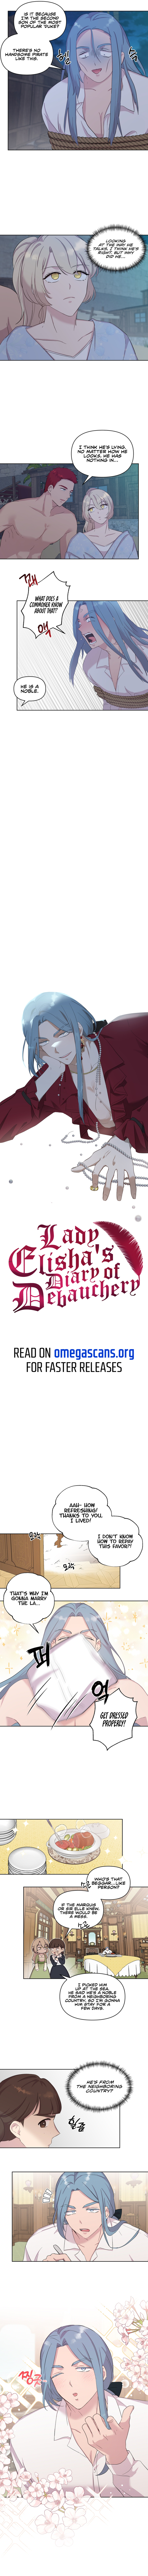 Lady Elisha’s Diary of Debauchery image